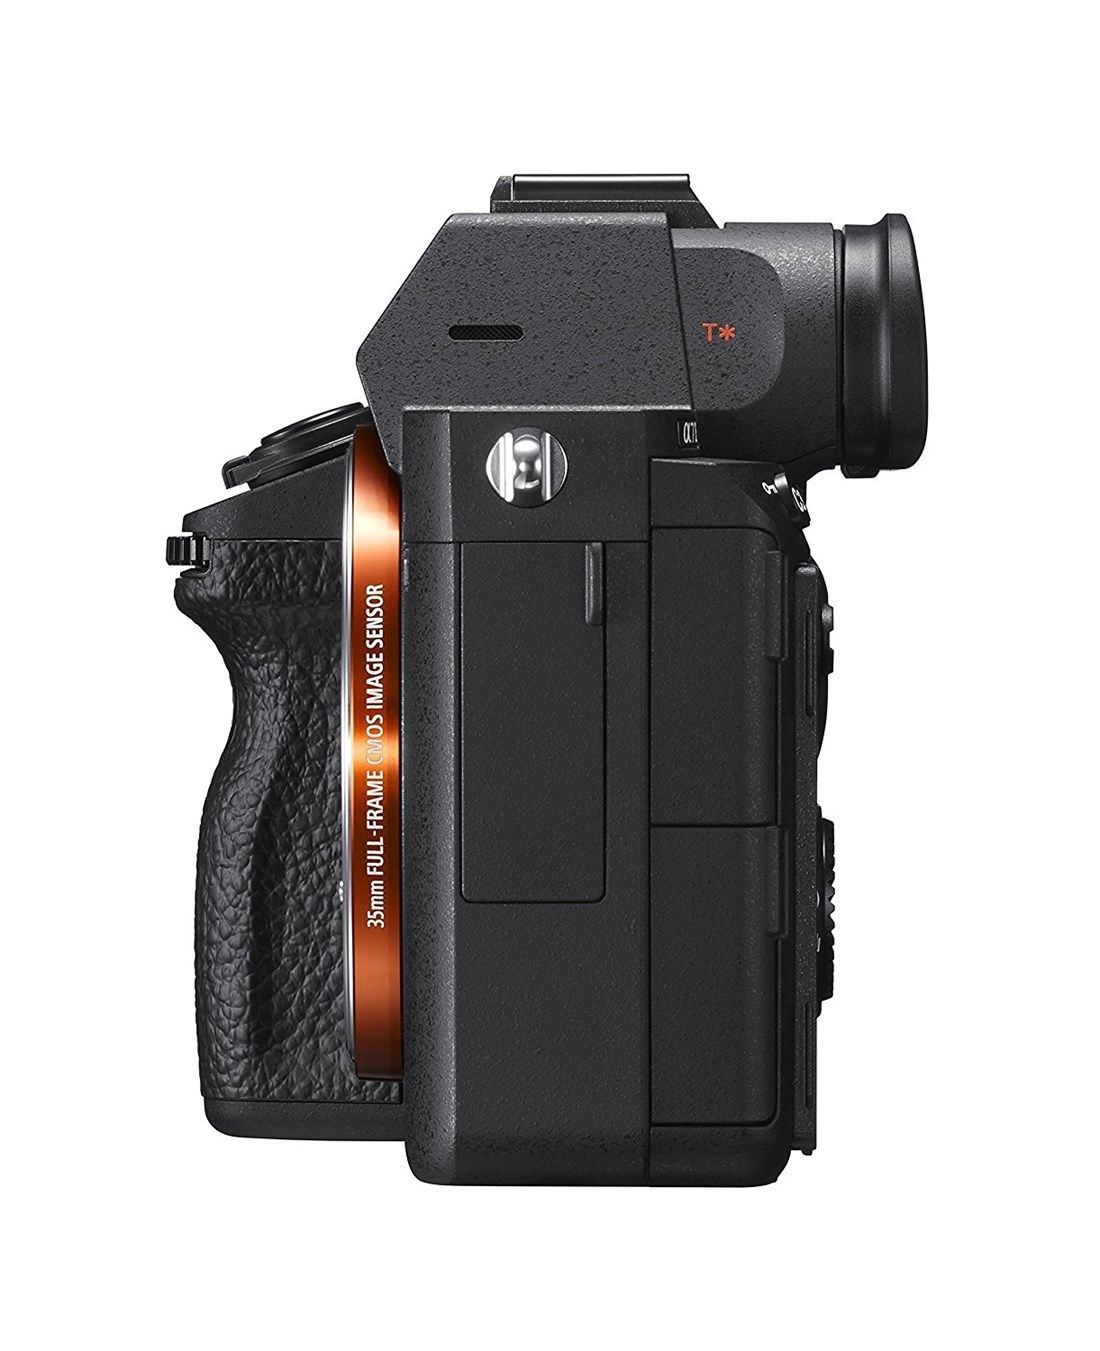 Sony Alpha a7 III Full Frame Mirrorless Digital Camera with 28-70mm Lens Kit